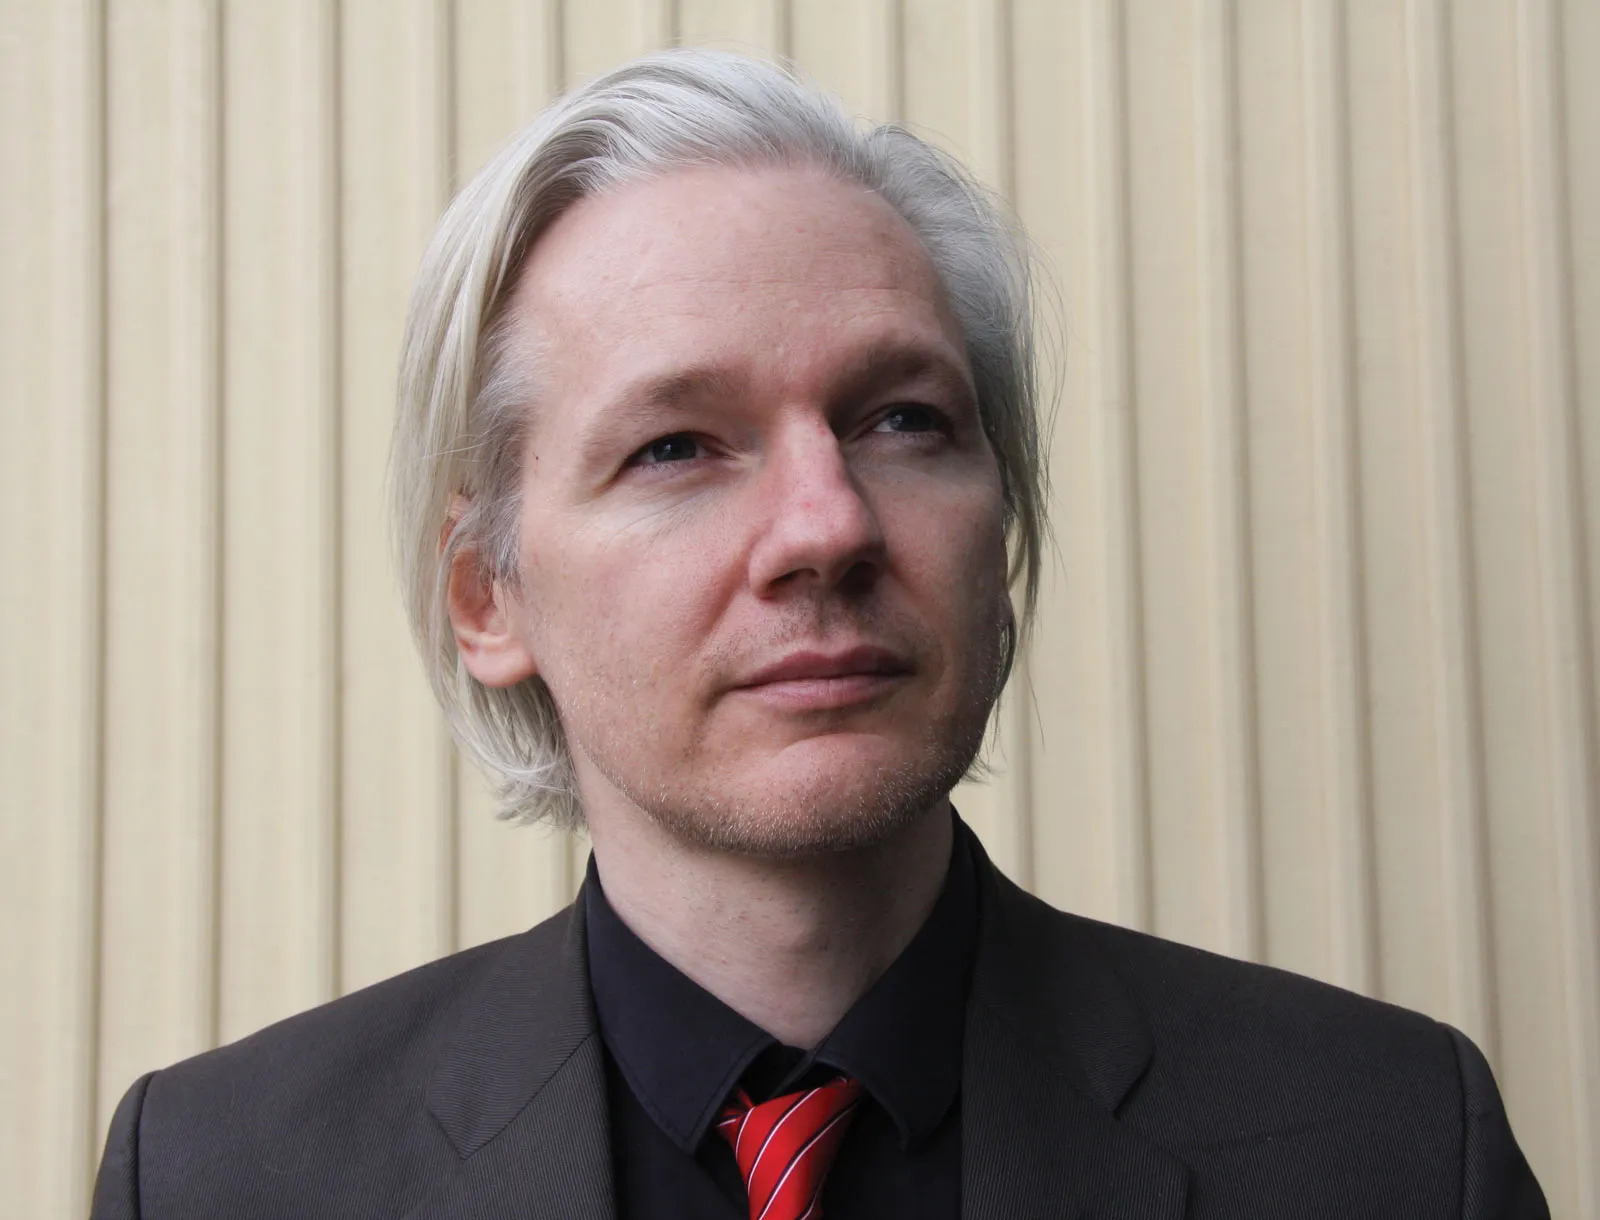 Julian-Assange-conference-Tonsberg-Nor-March-2010.jpg